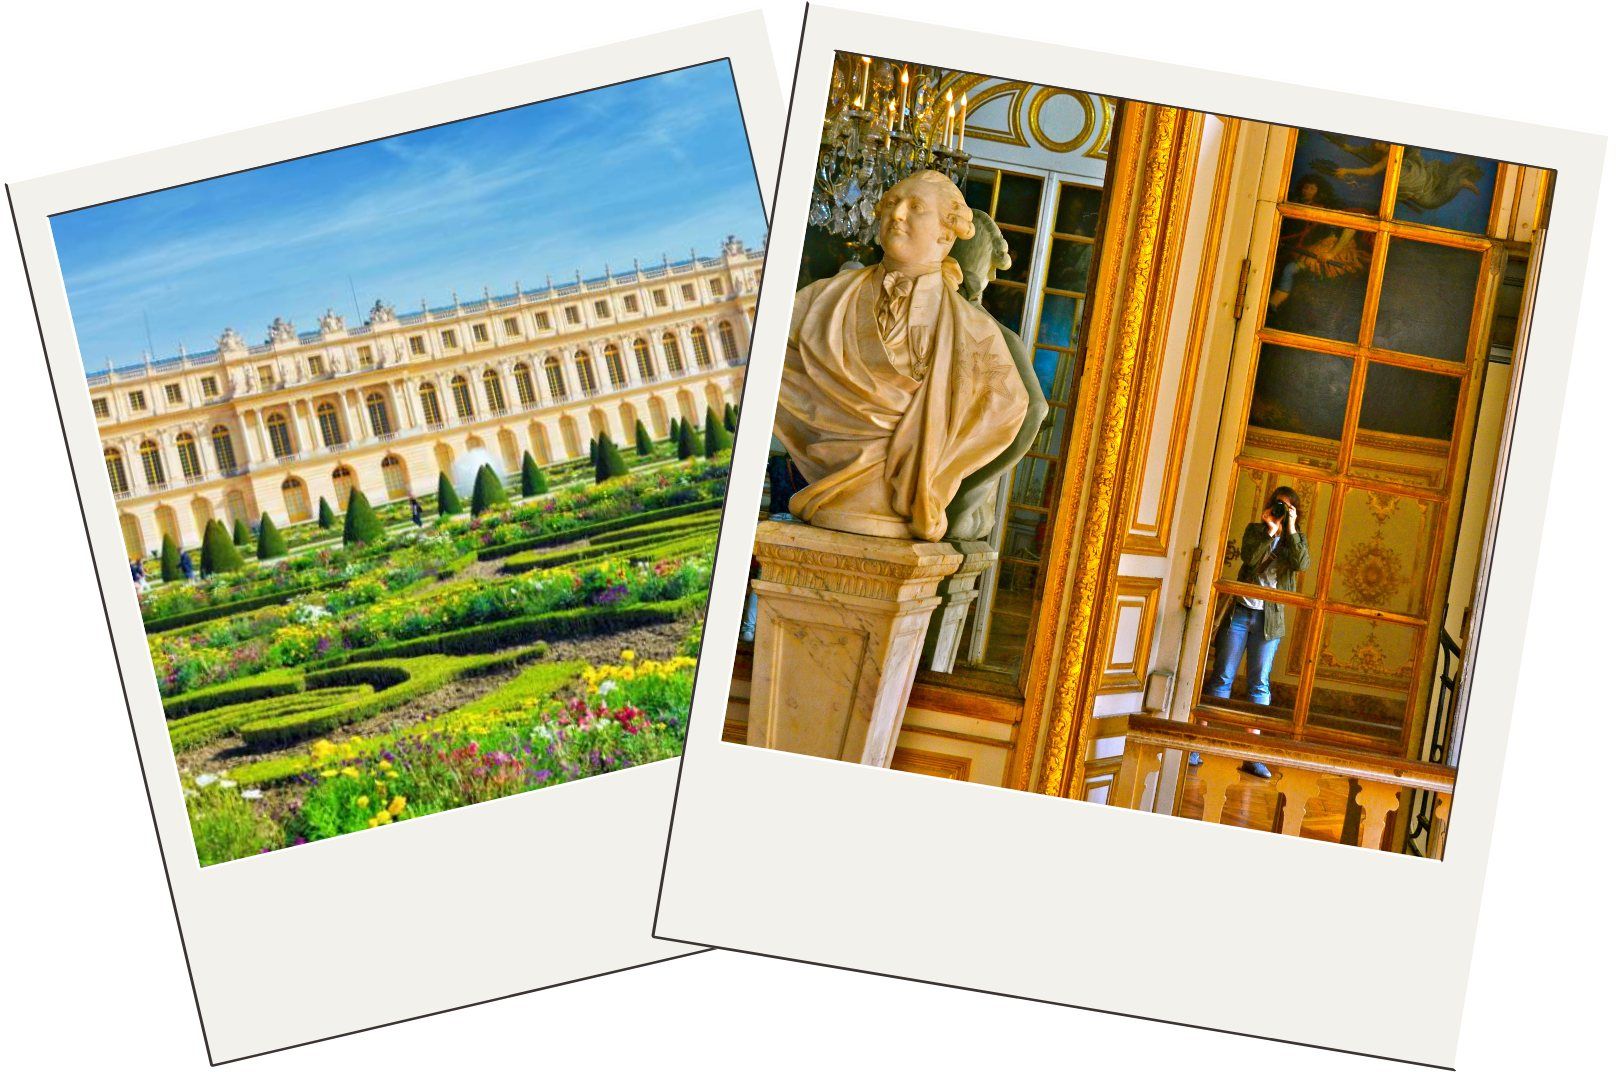 Palace of Versailles near Paris, France